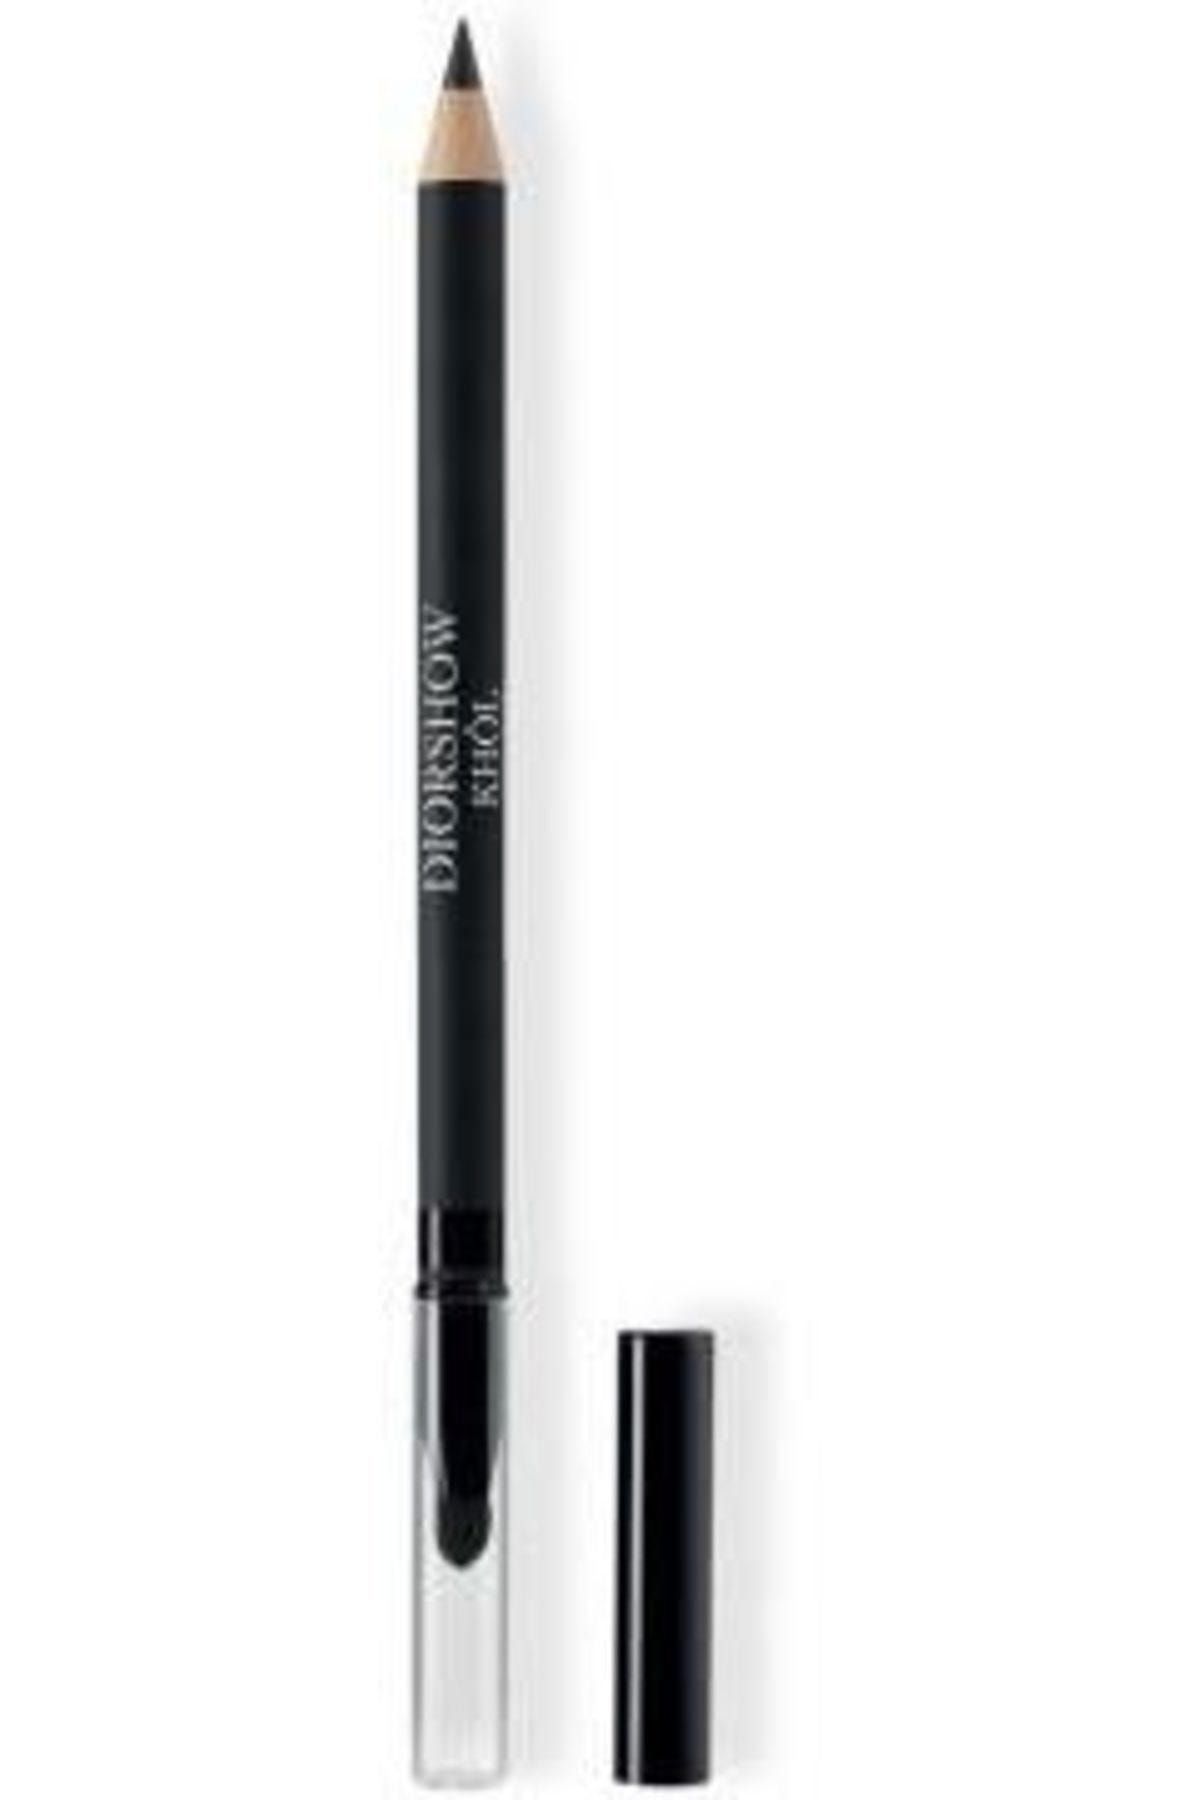 Dior Siyah Eyeliner - Khol Eye Pencil Waterproof